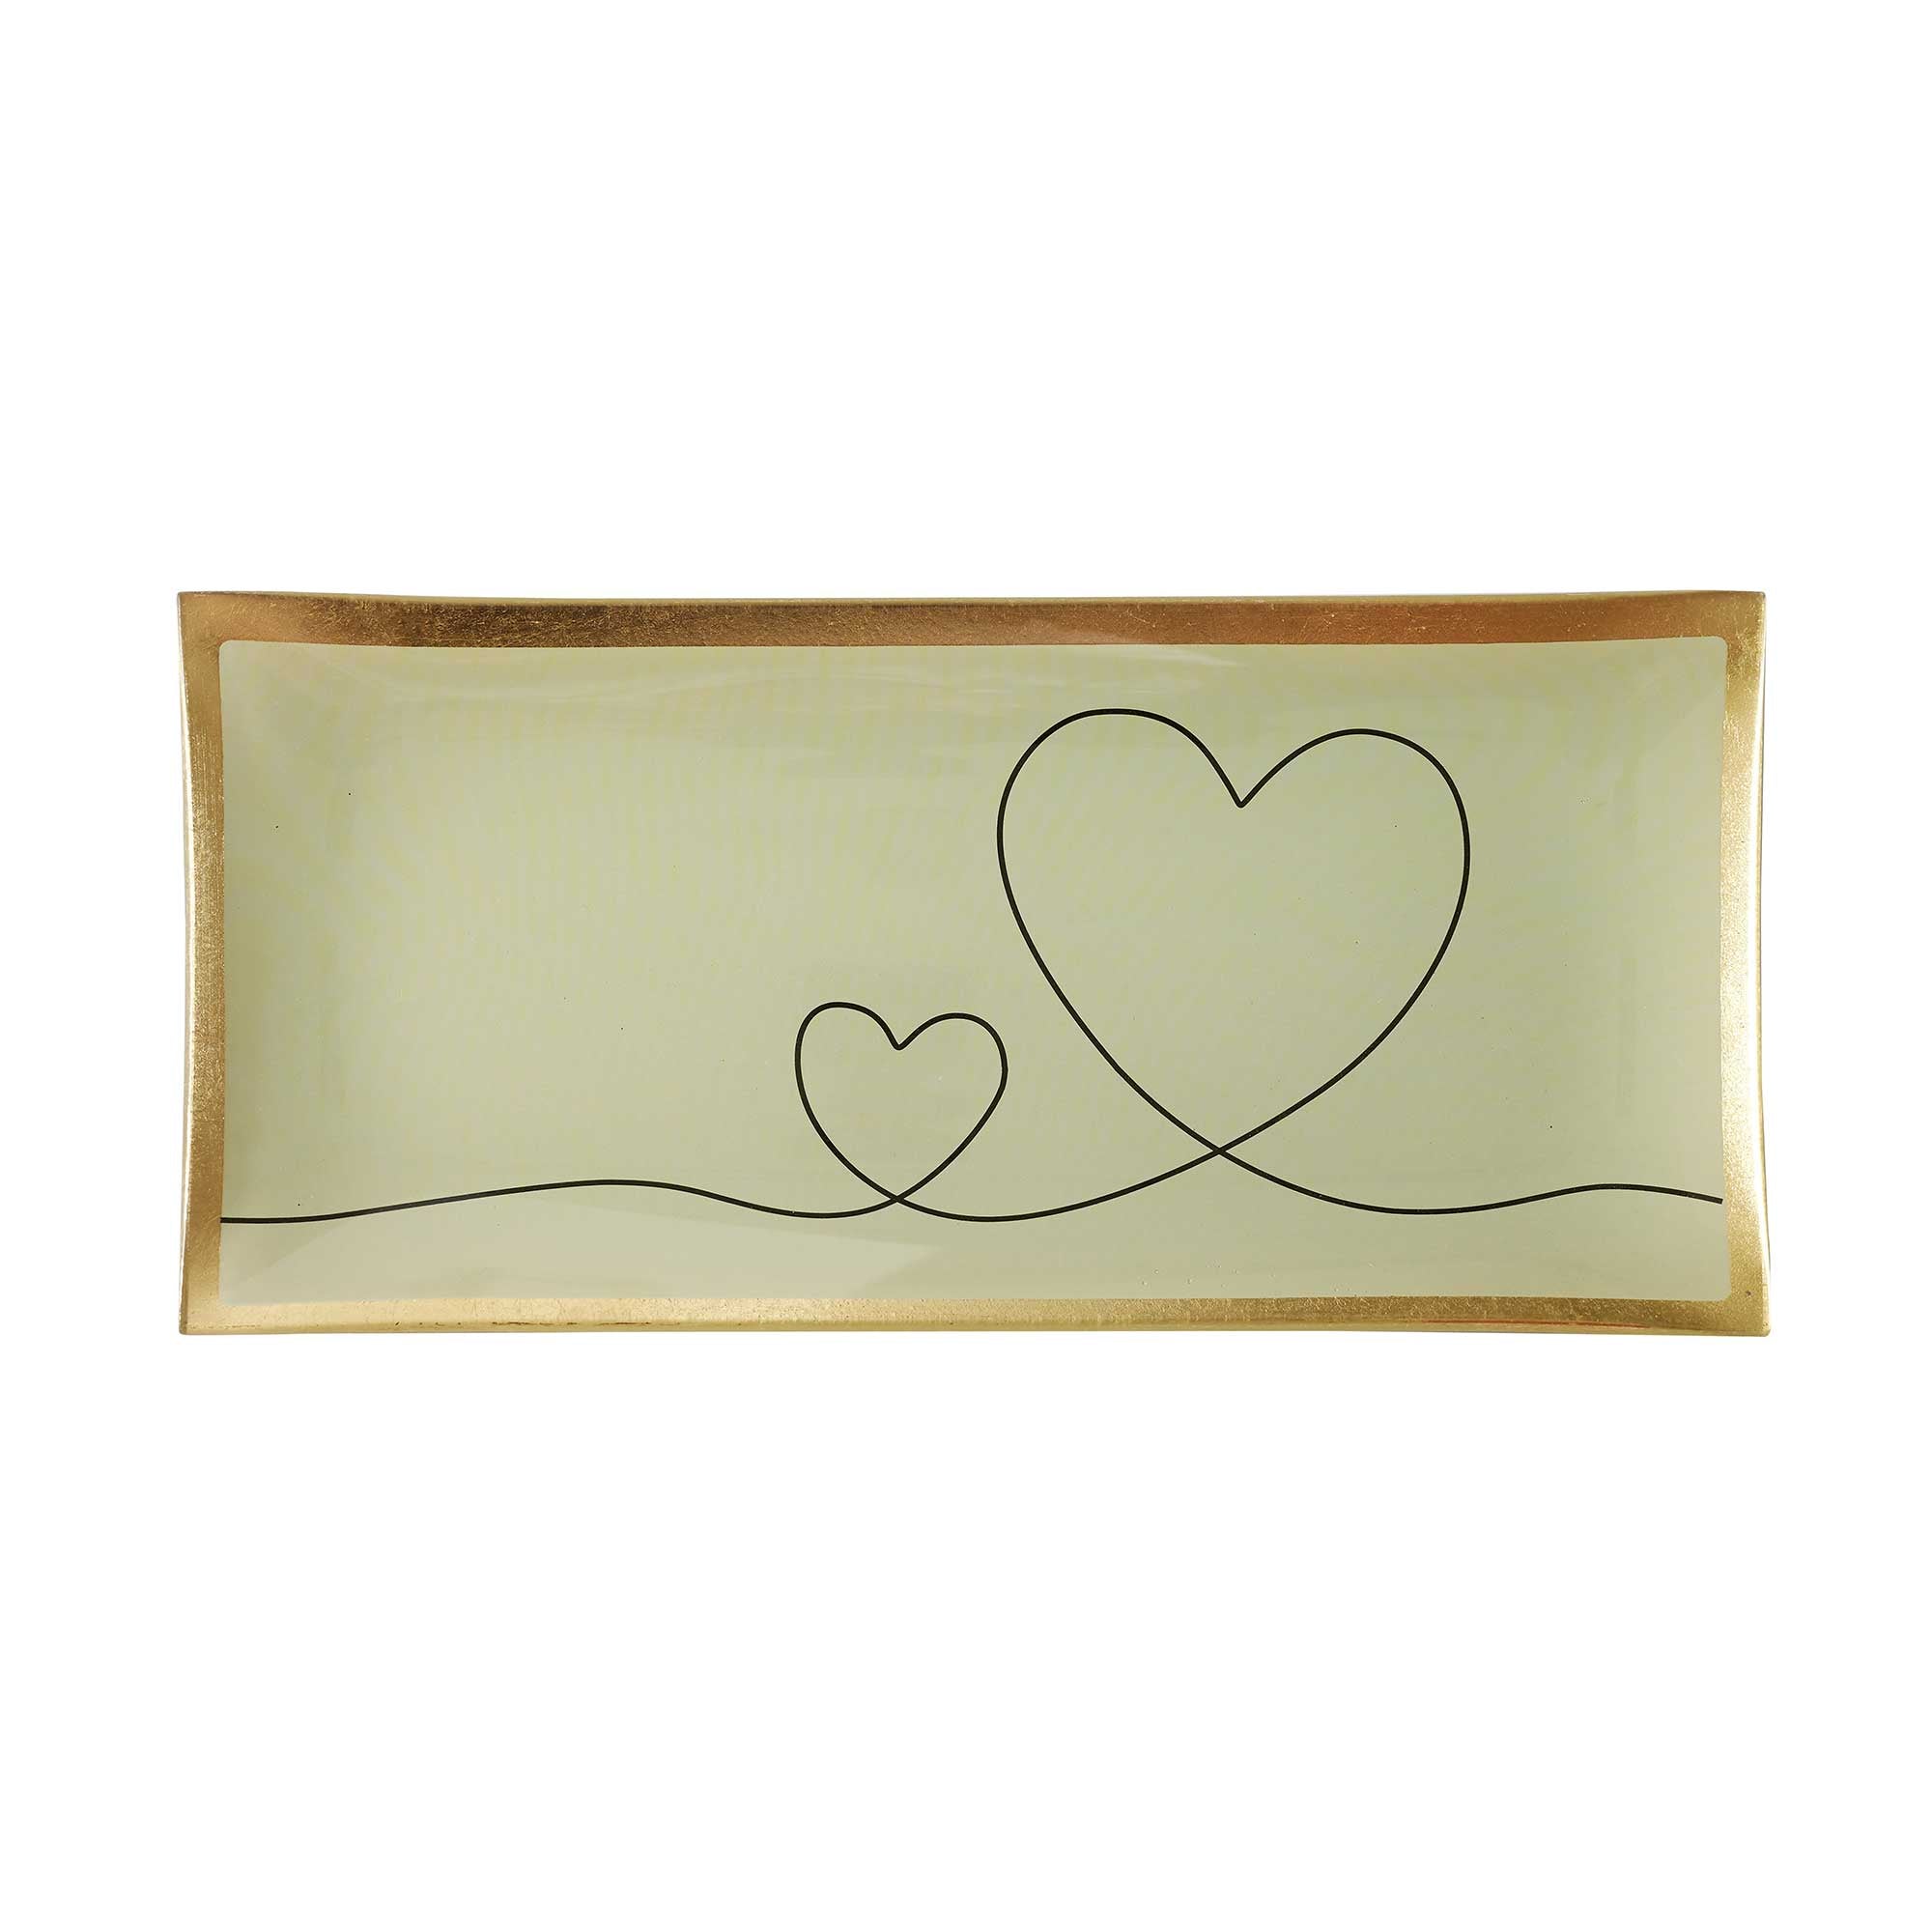 Glass plate "LOVE HEARTS"